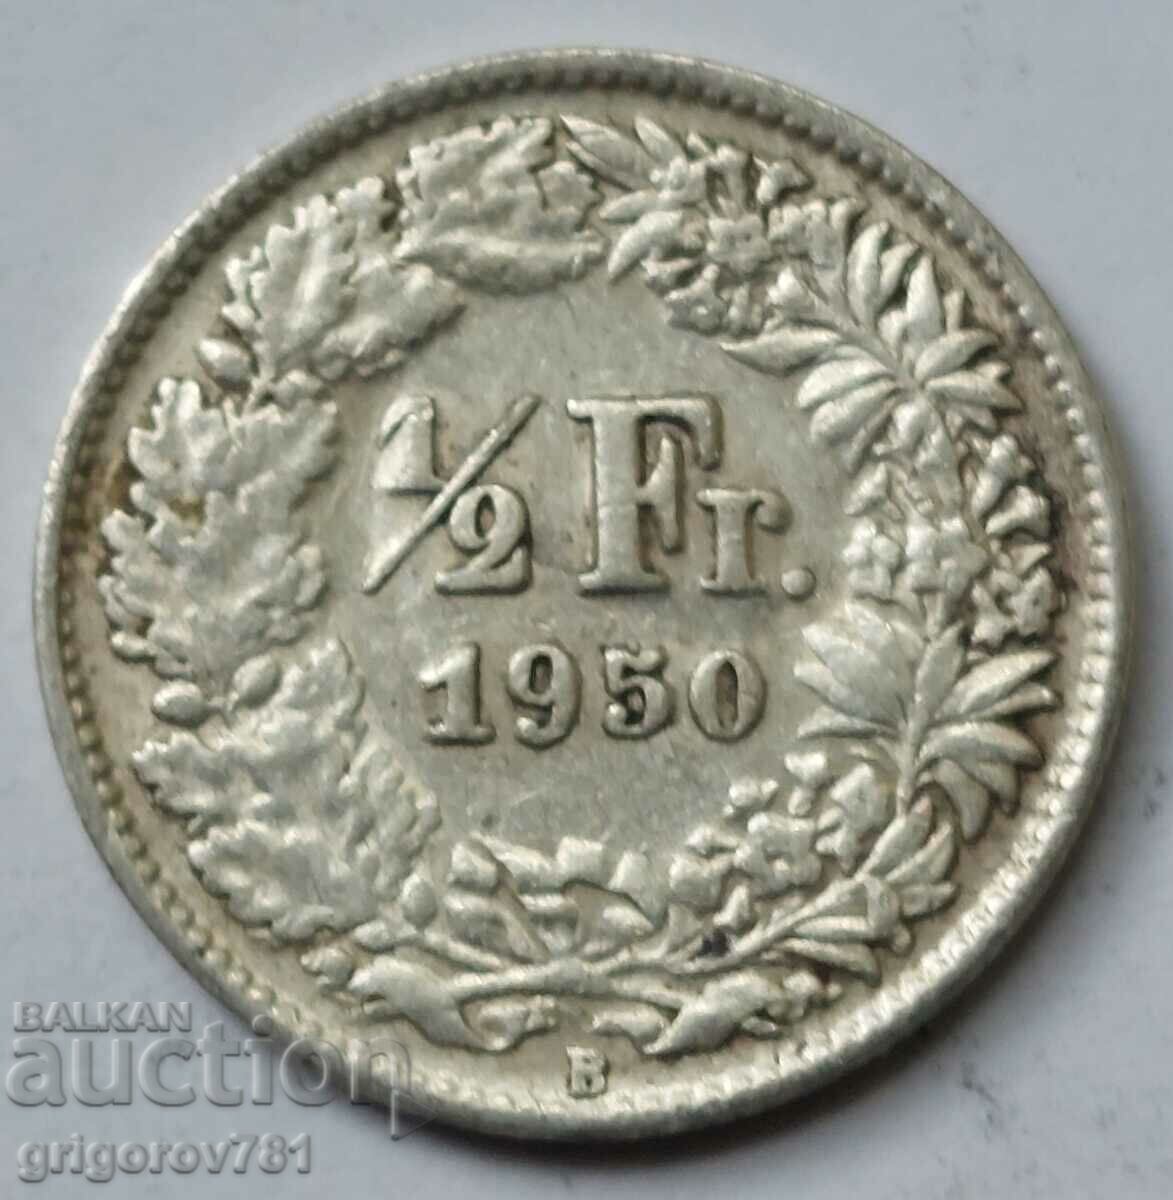 1/2 Franc Silver Switzerland 1950 B - Silver Coin #68